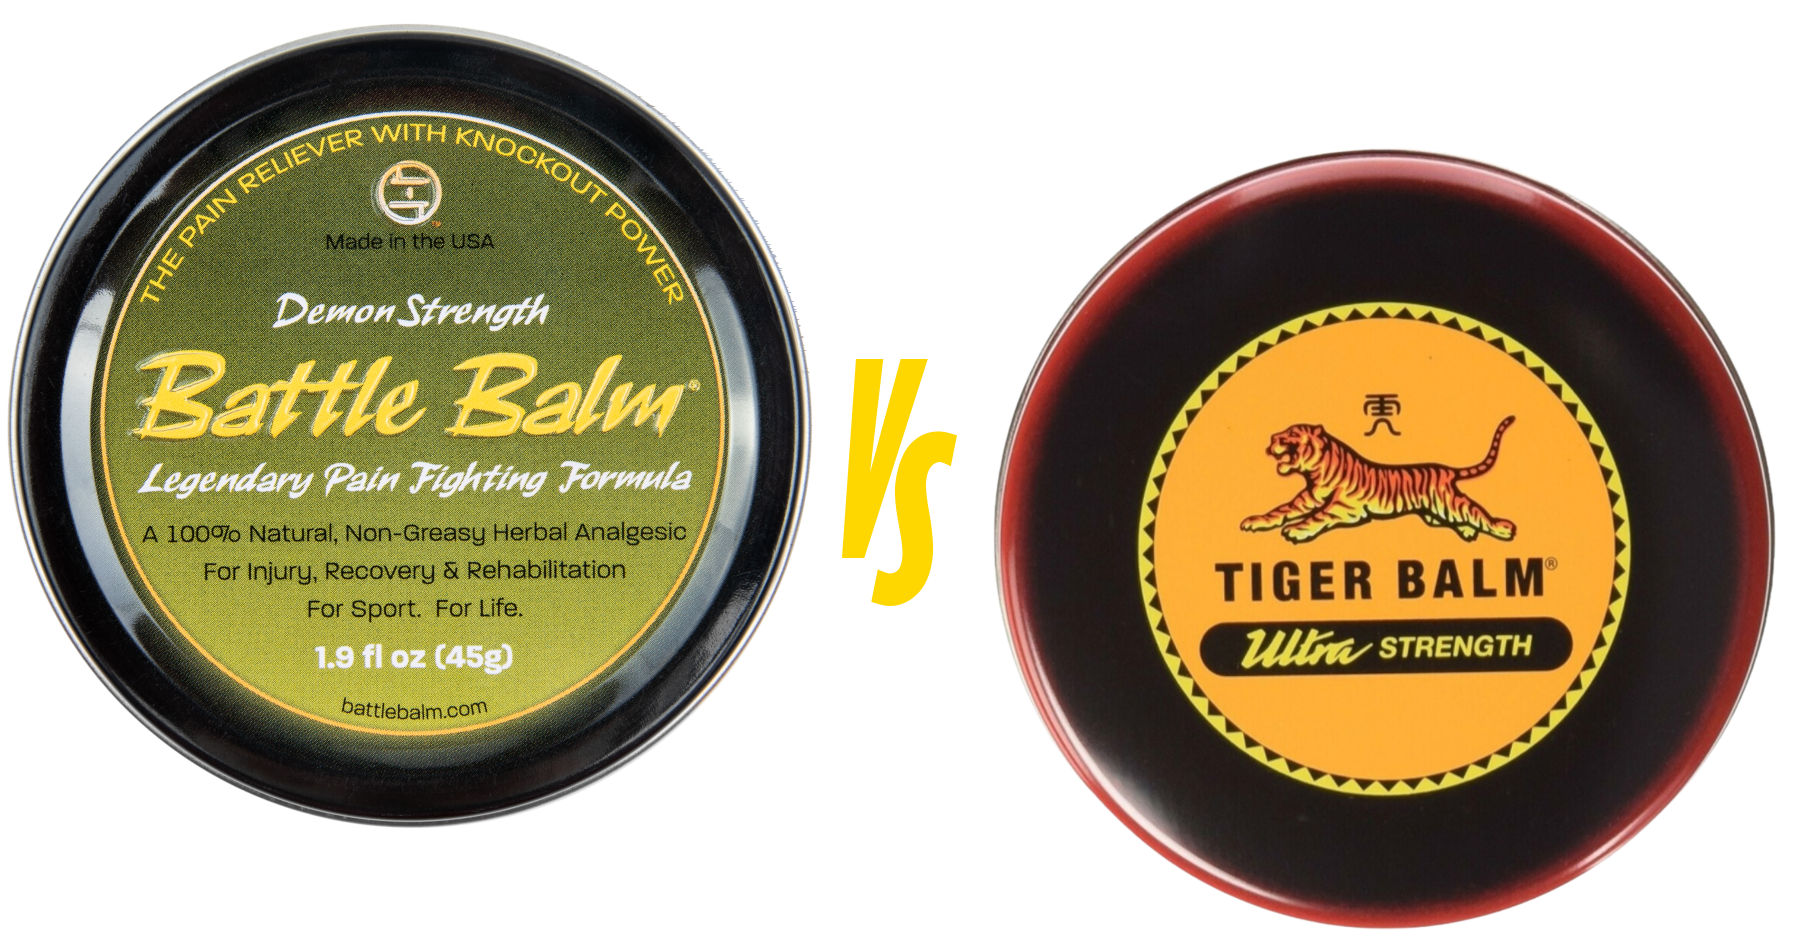 Battle Balm Demon Strength all natural topical pain relief cream vs Tiger Balm Ultra Strength Sports Rub